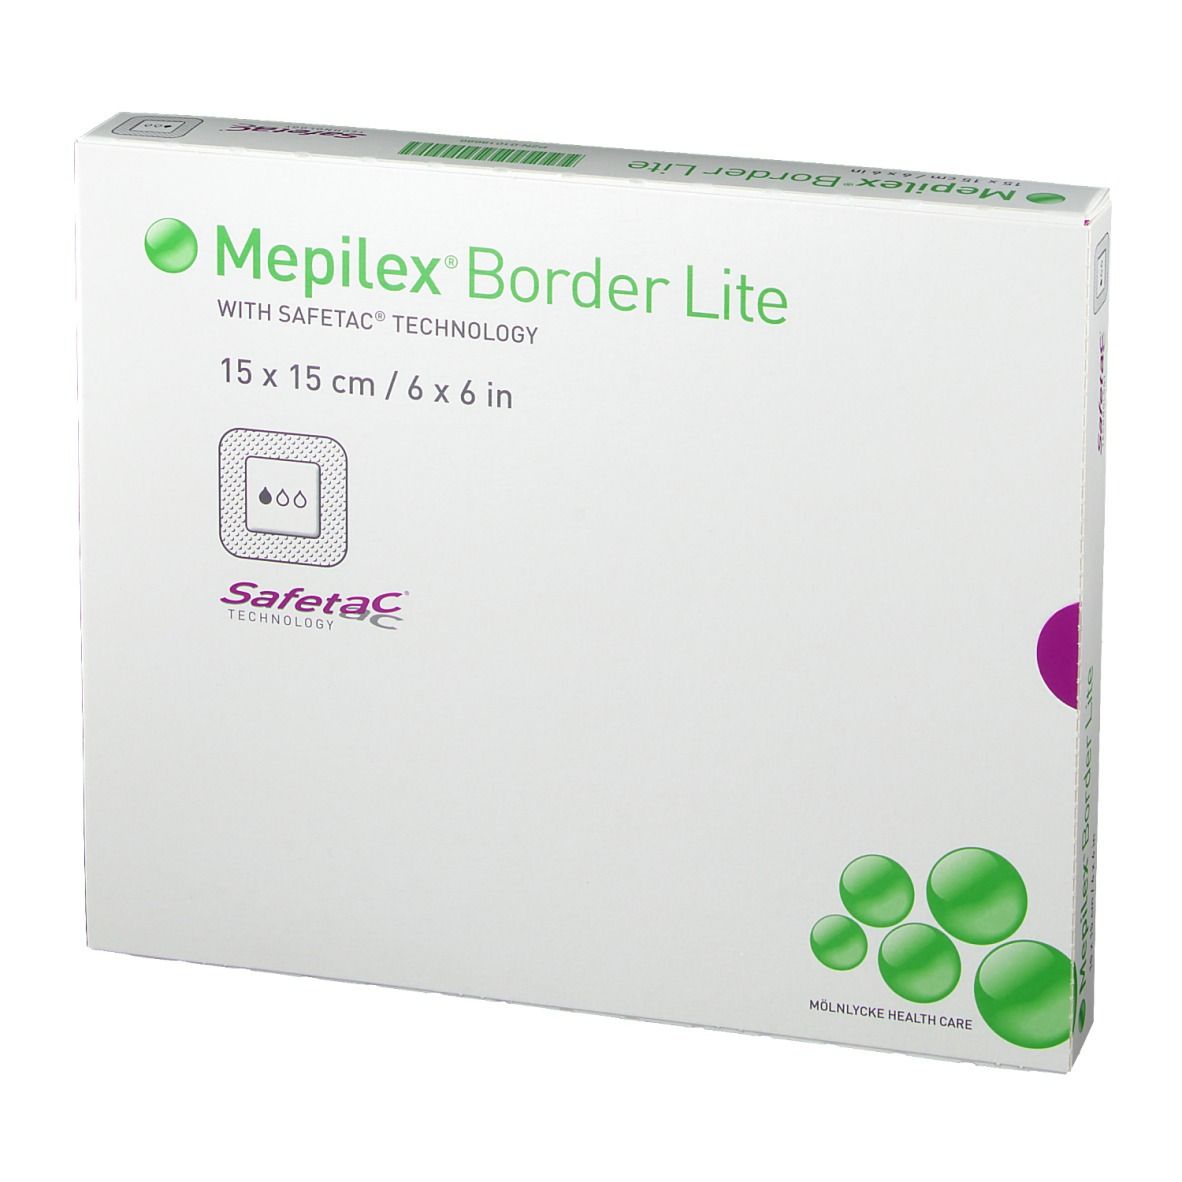 Mepilex® Border Lite 15 x 15 cm